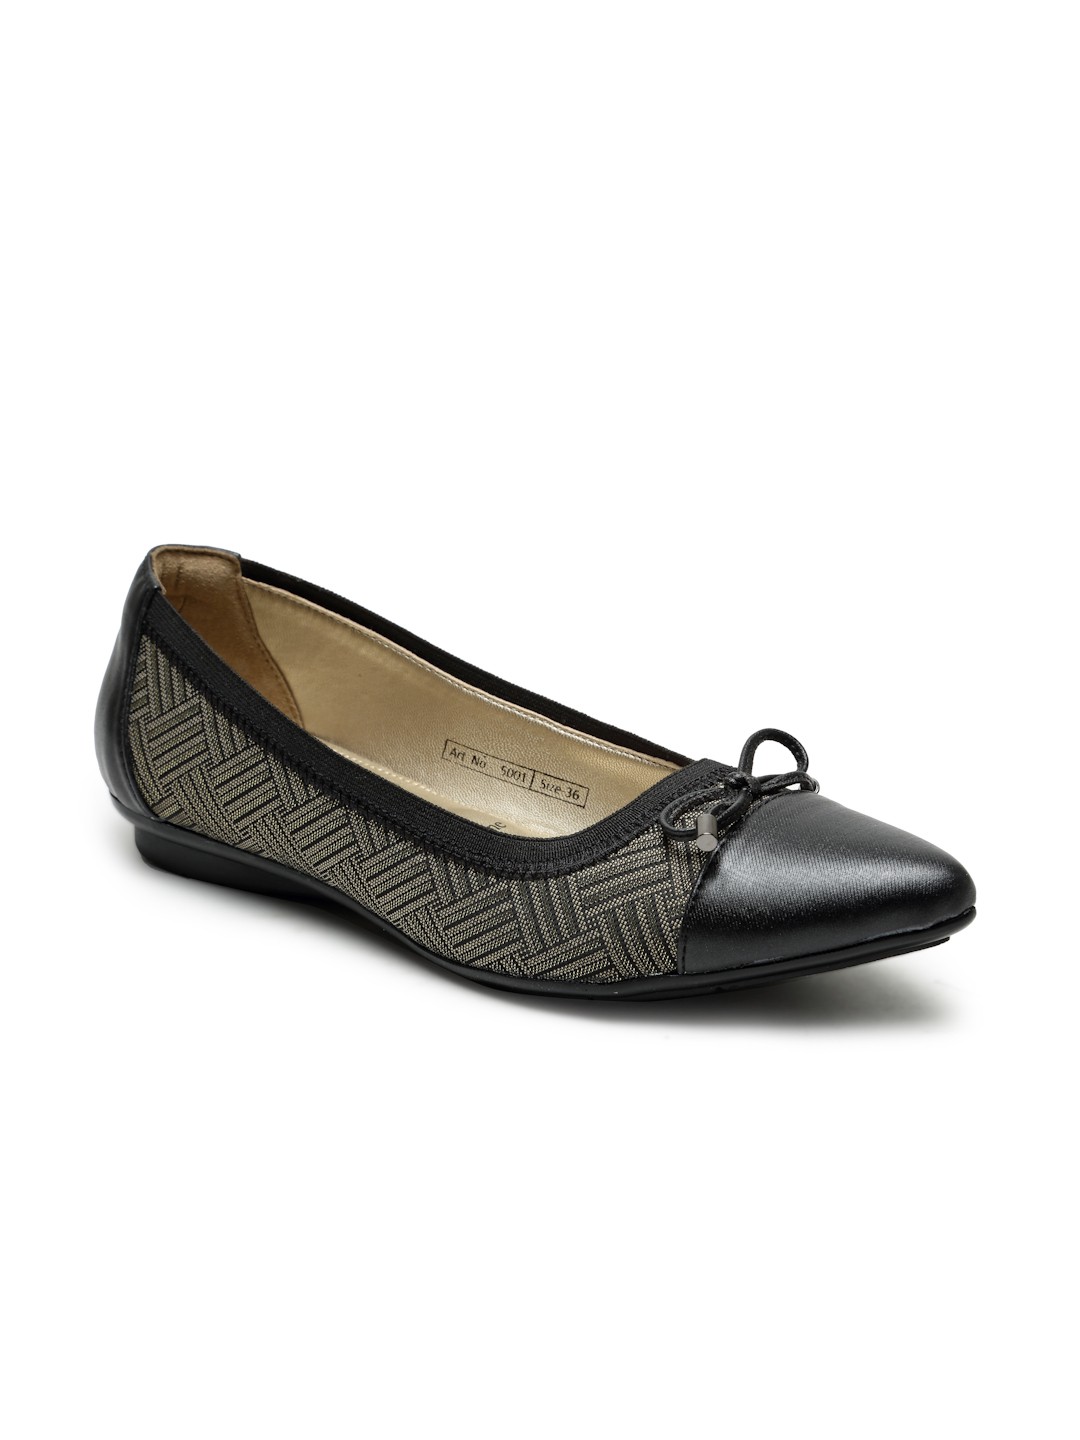 Buy Von Wellx Germany Comfort Women's Black Casual Shoes Lisa Online in West Bengal